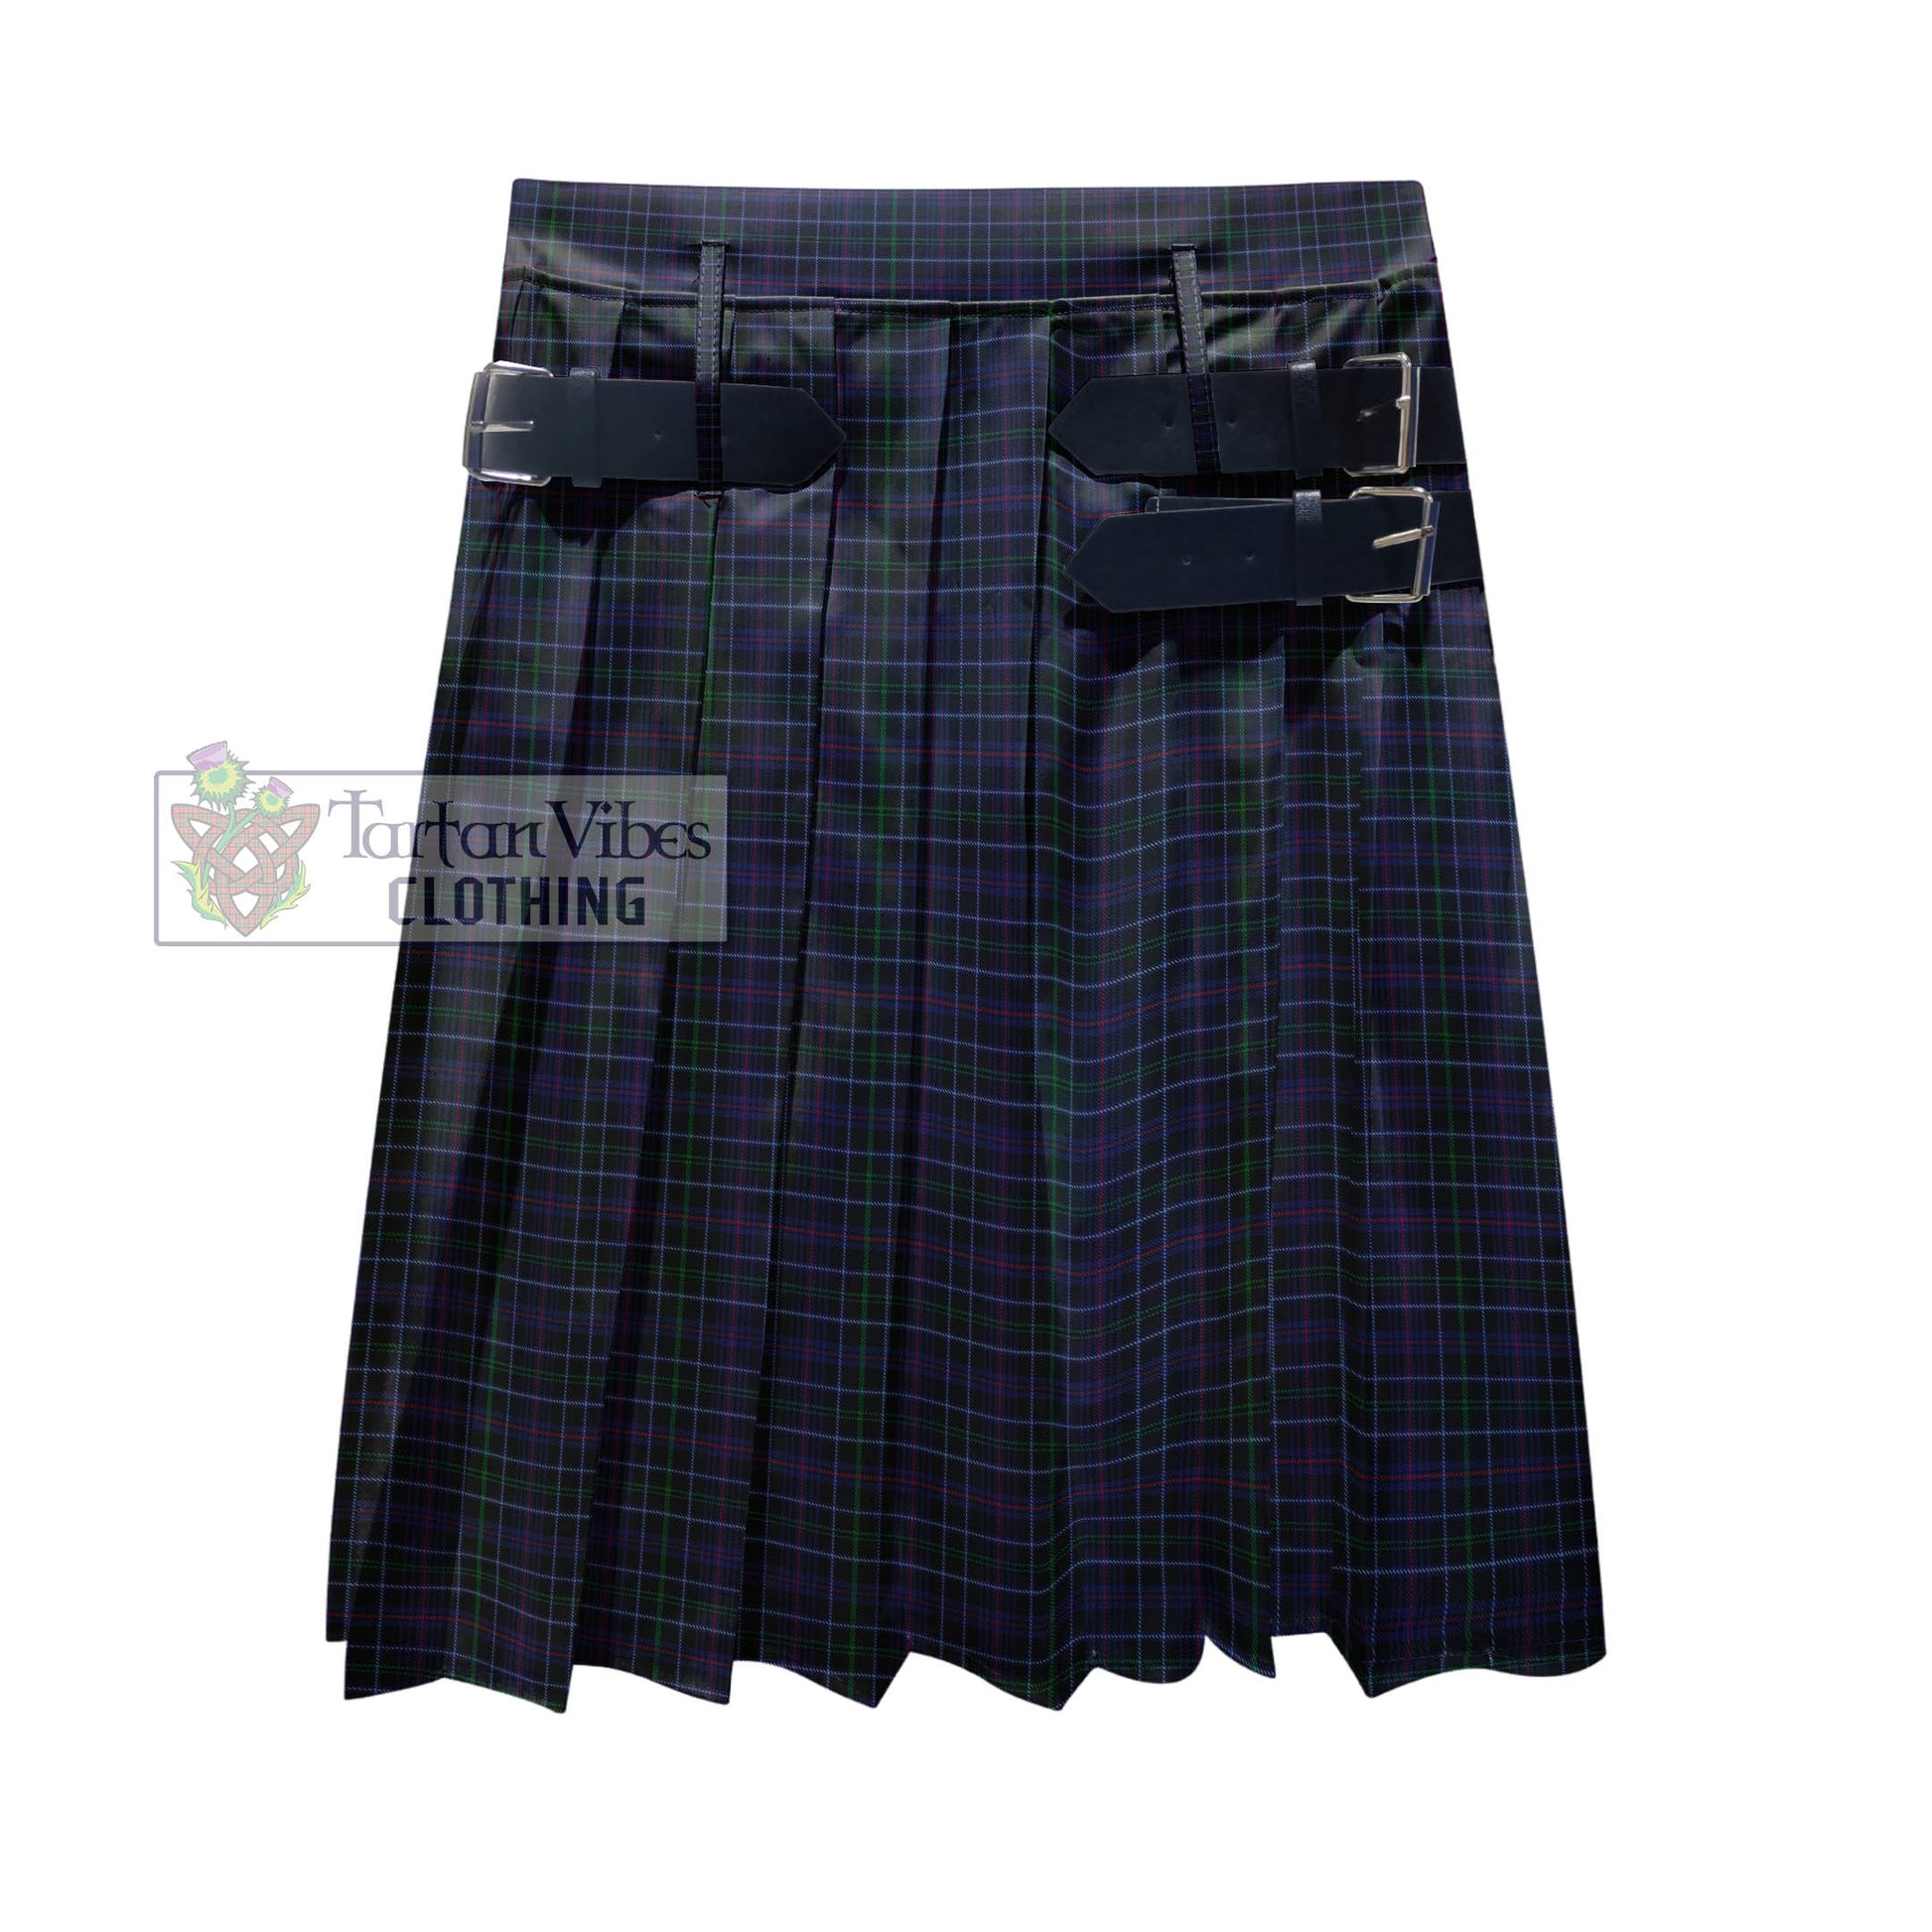 Tartan Vibes Clothing Pride (Wales) Tartan Men's Pleated Skirt - Fashion Casual Retro Scottish Style